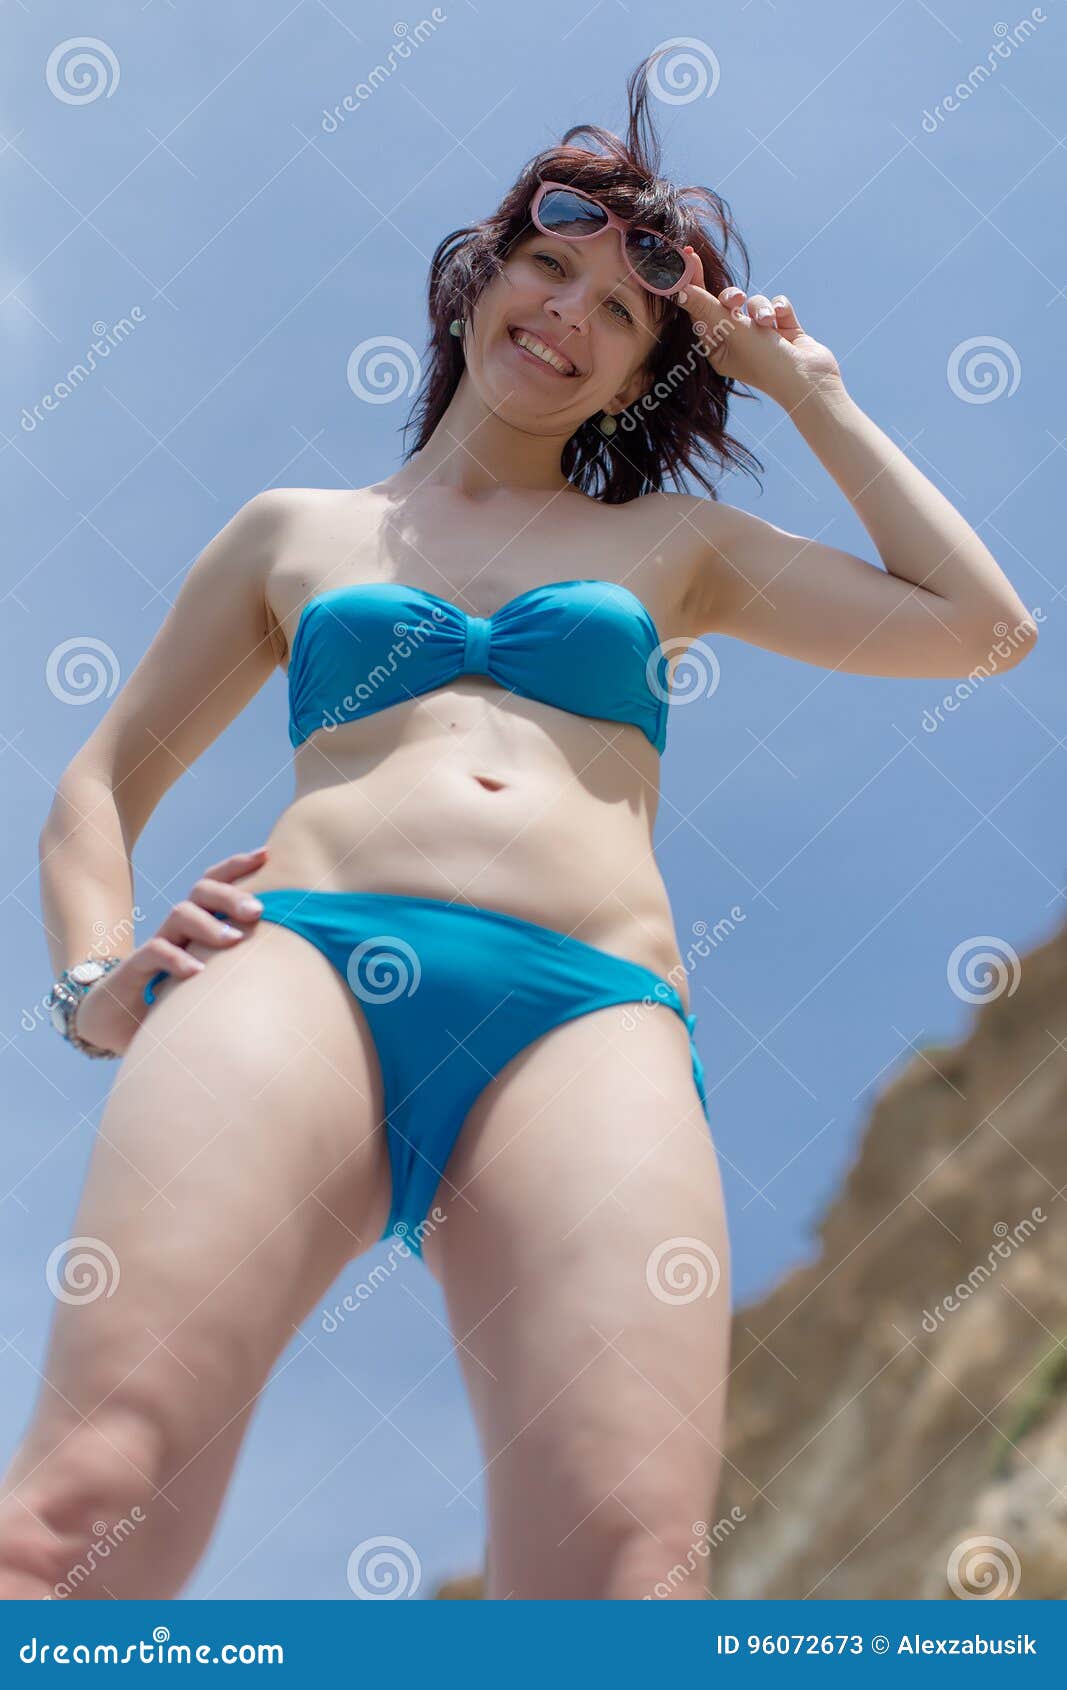 alexandra voodoo add photo middle aged woman bikini